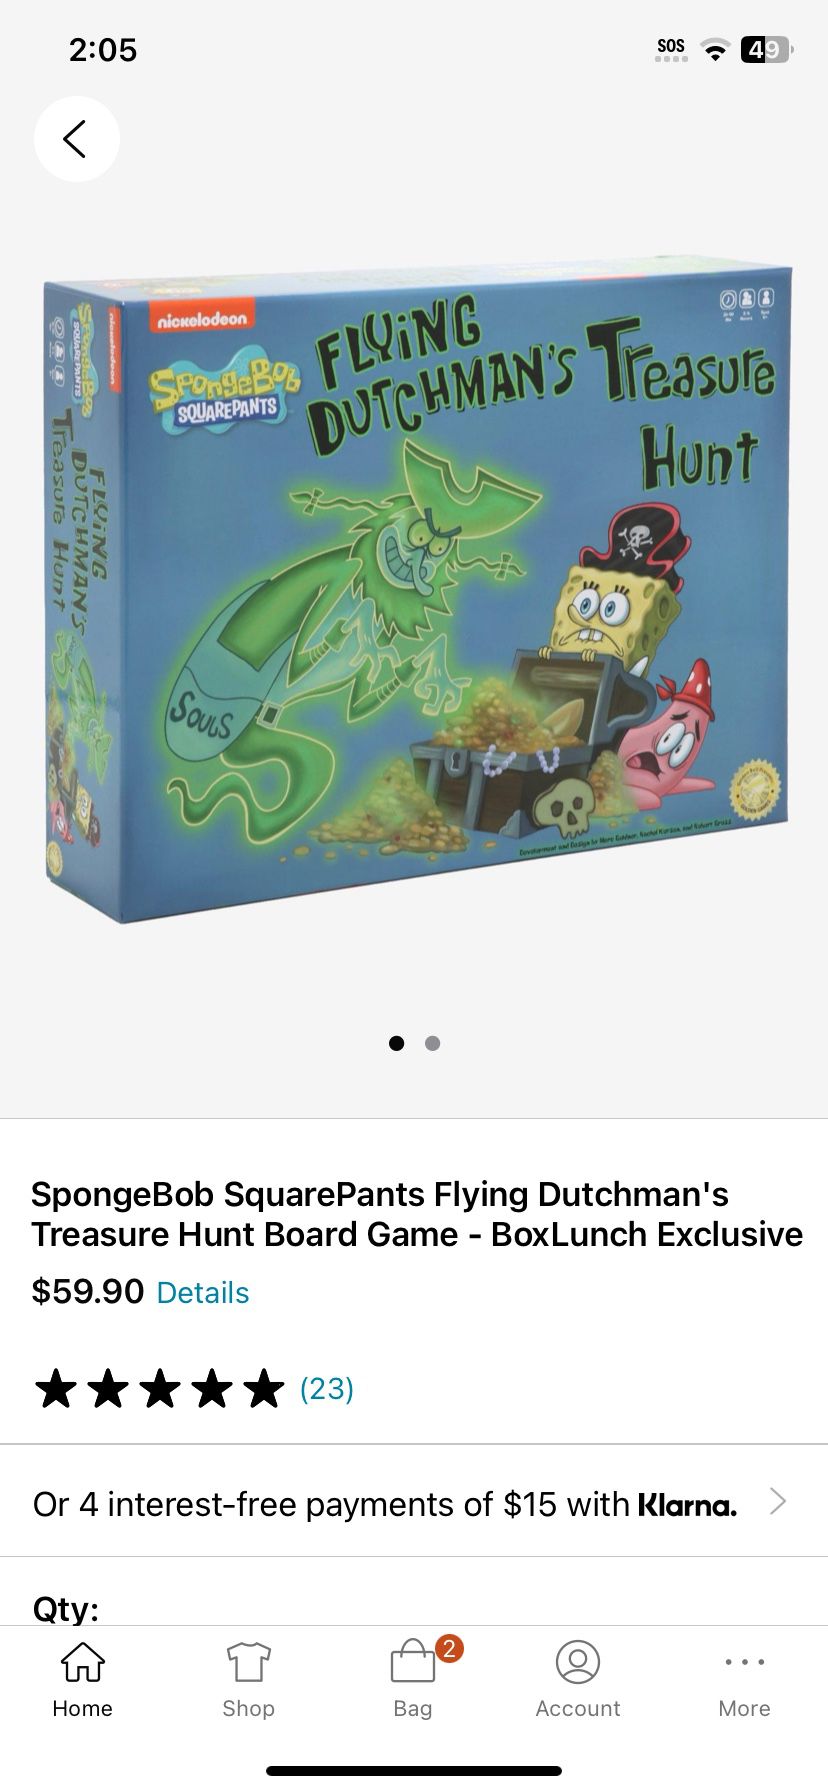 SpongeBob SquarePants The Flying Dutchman’s Treasure Hunt Board Game